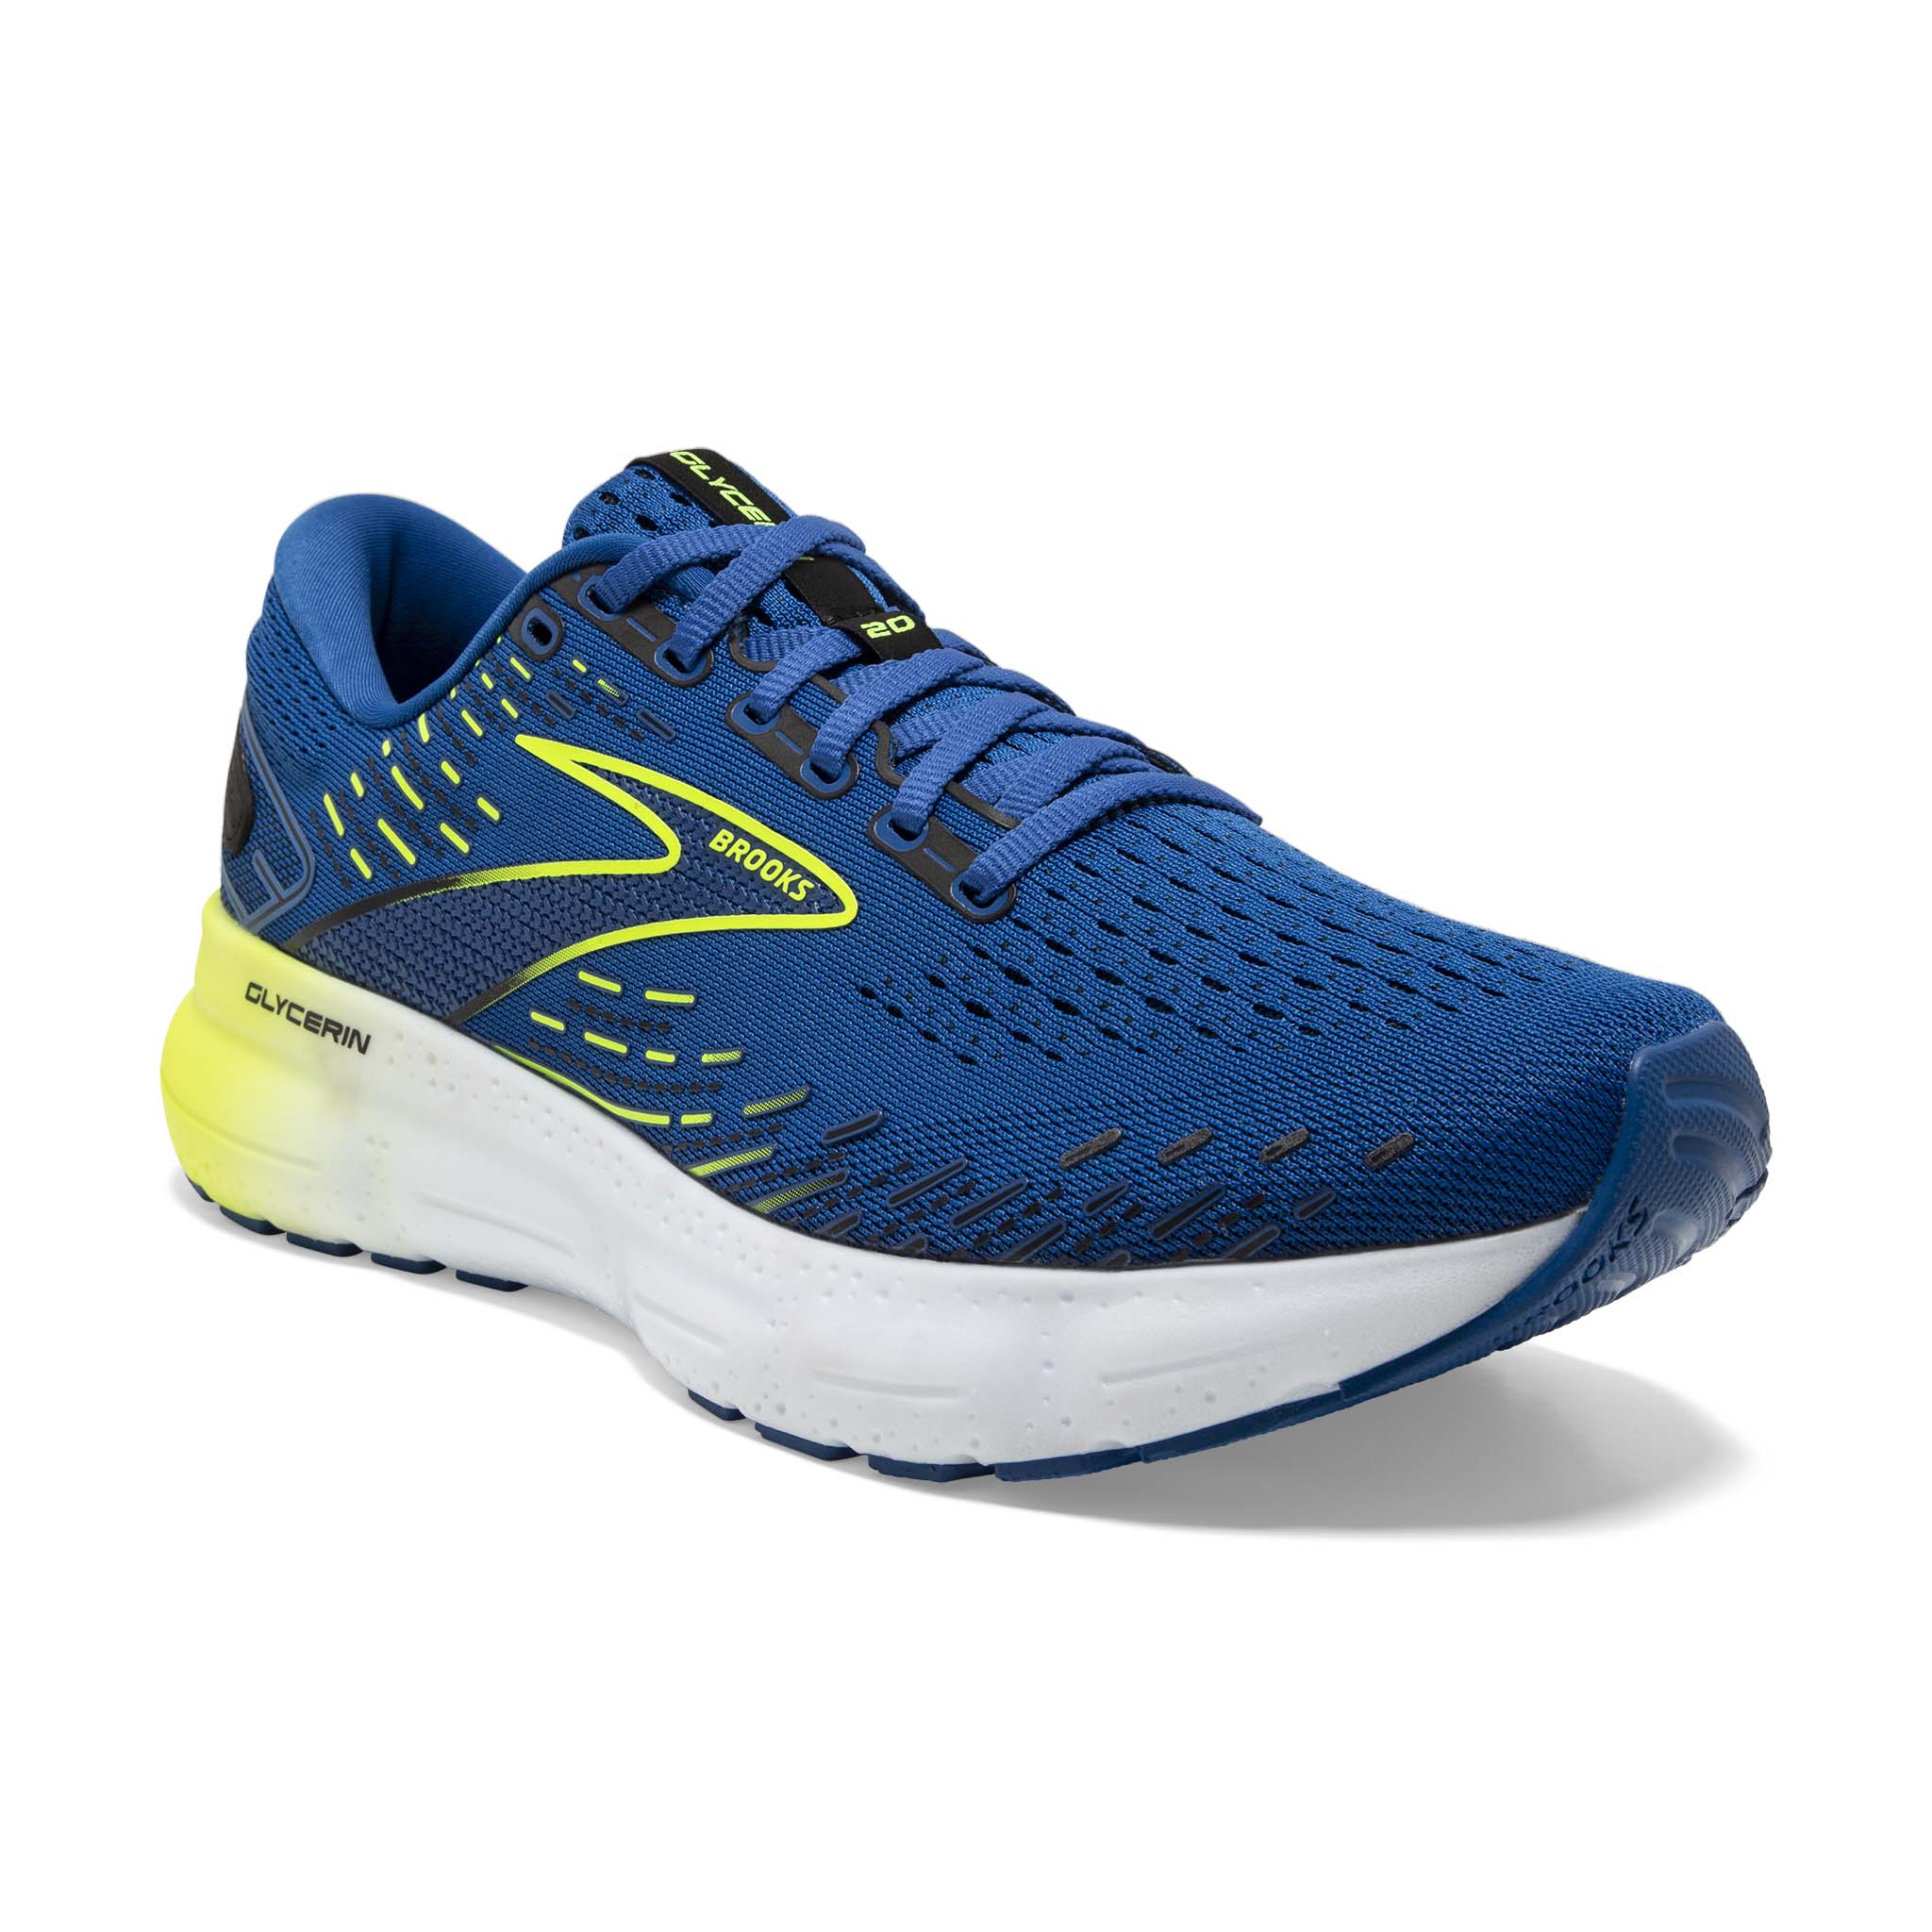 Chaussures de Sport - Running - Homme - Bleu - Respirantes - Athlétique -  Sneakers Courtes - Fitness - Tennis